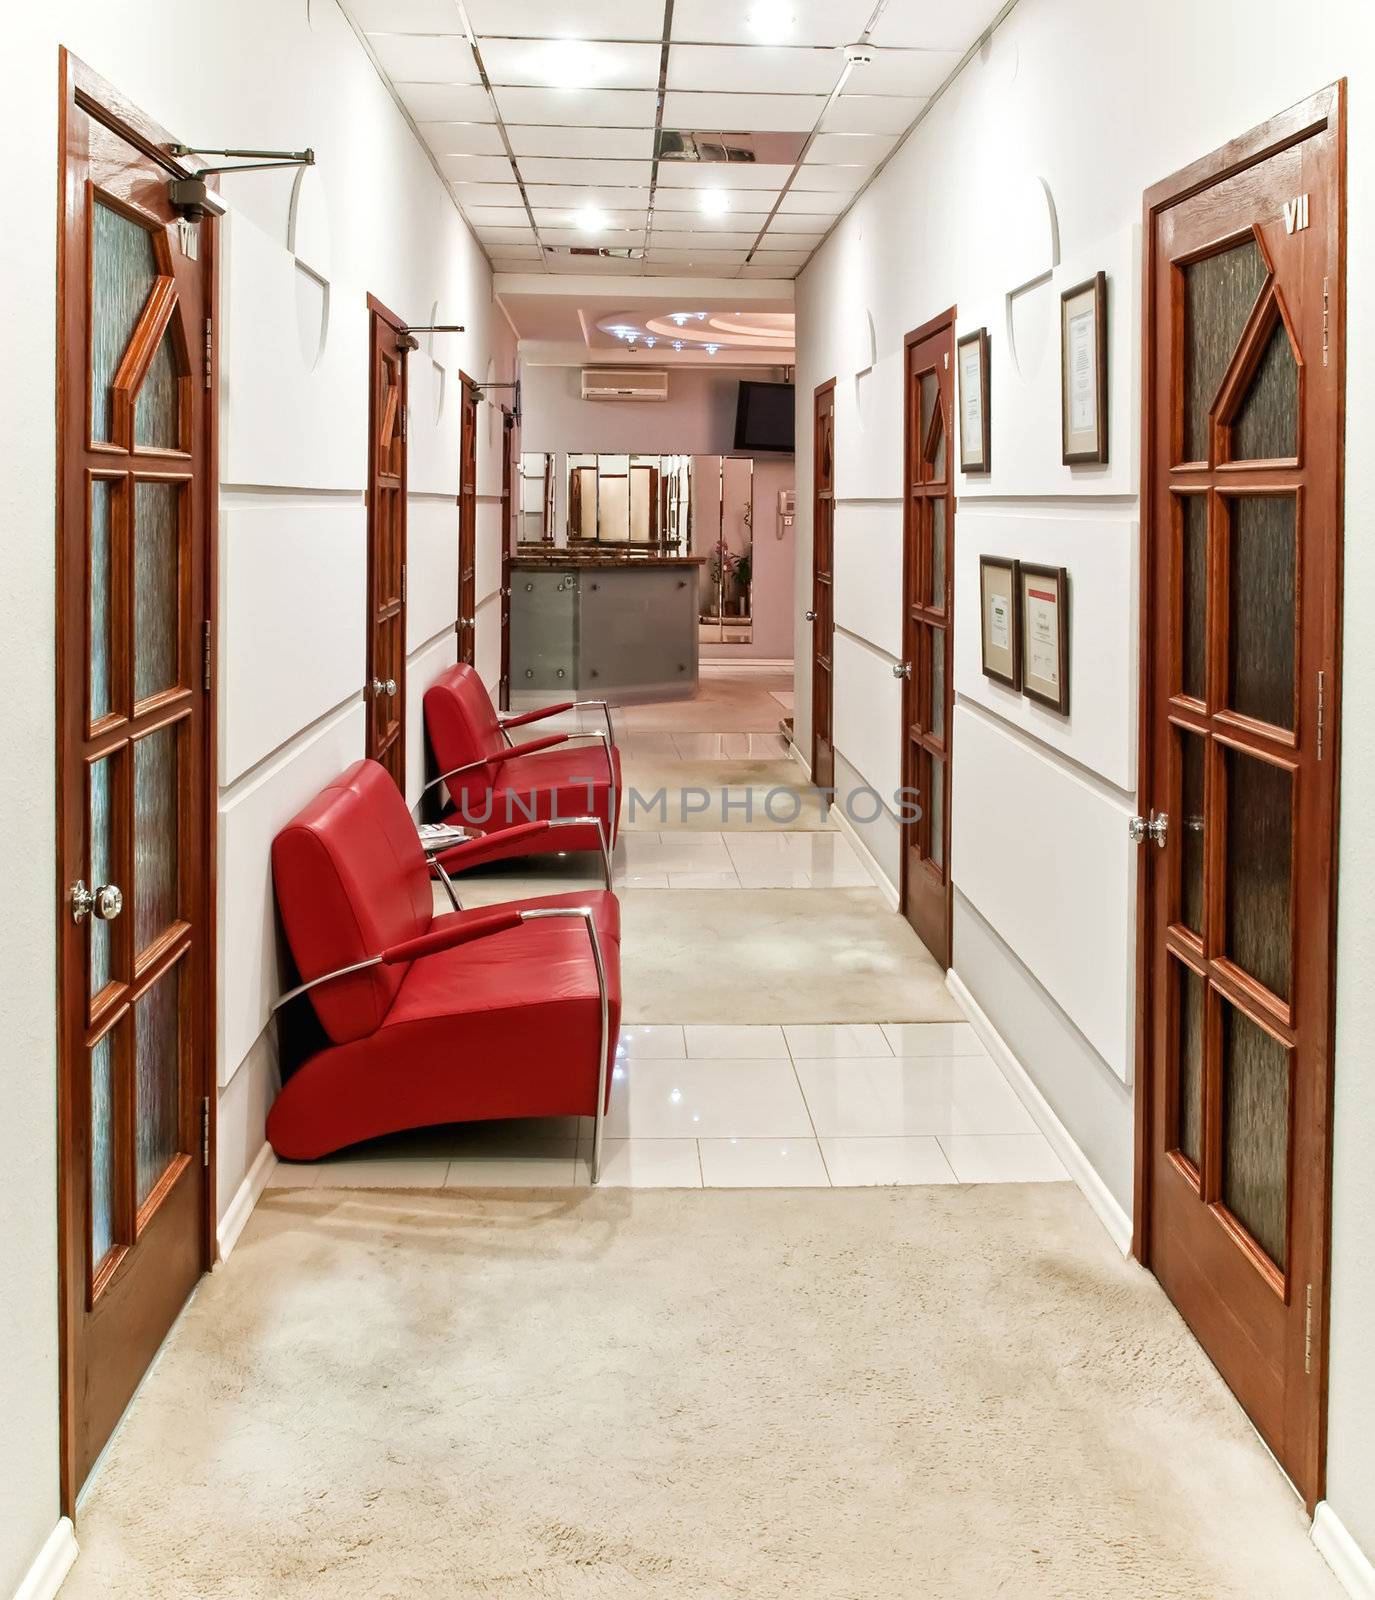 beatifel waiting room in modern office interior